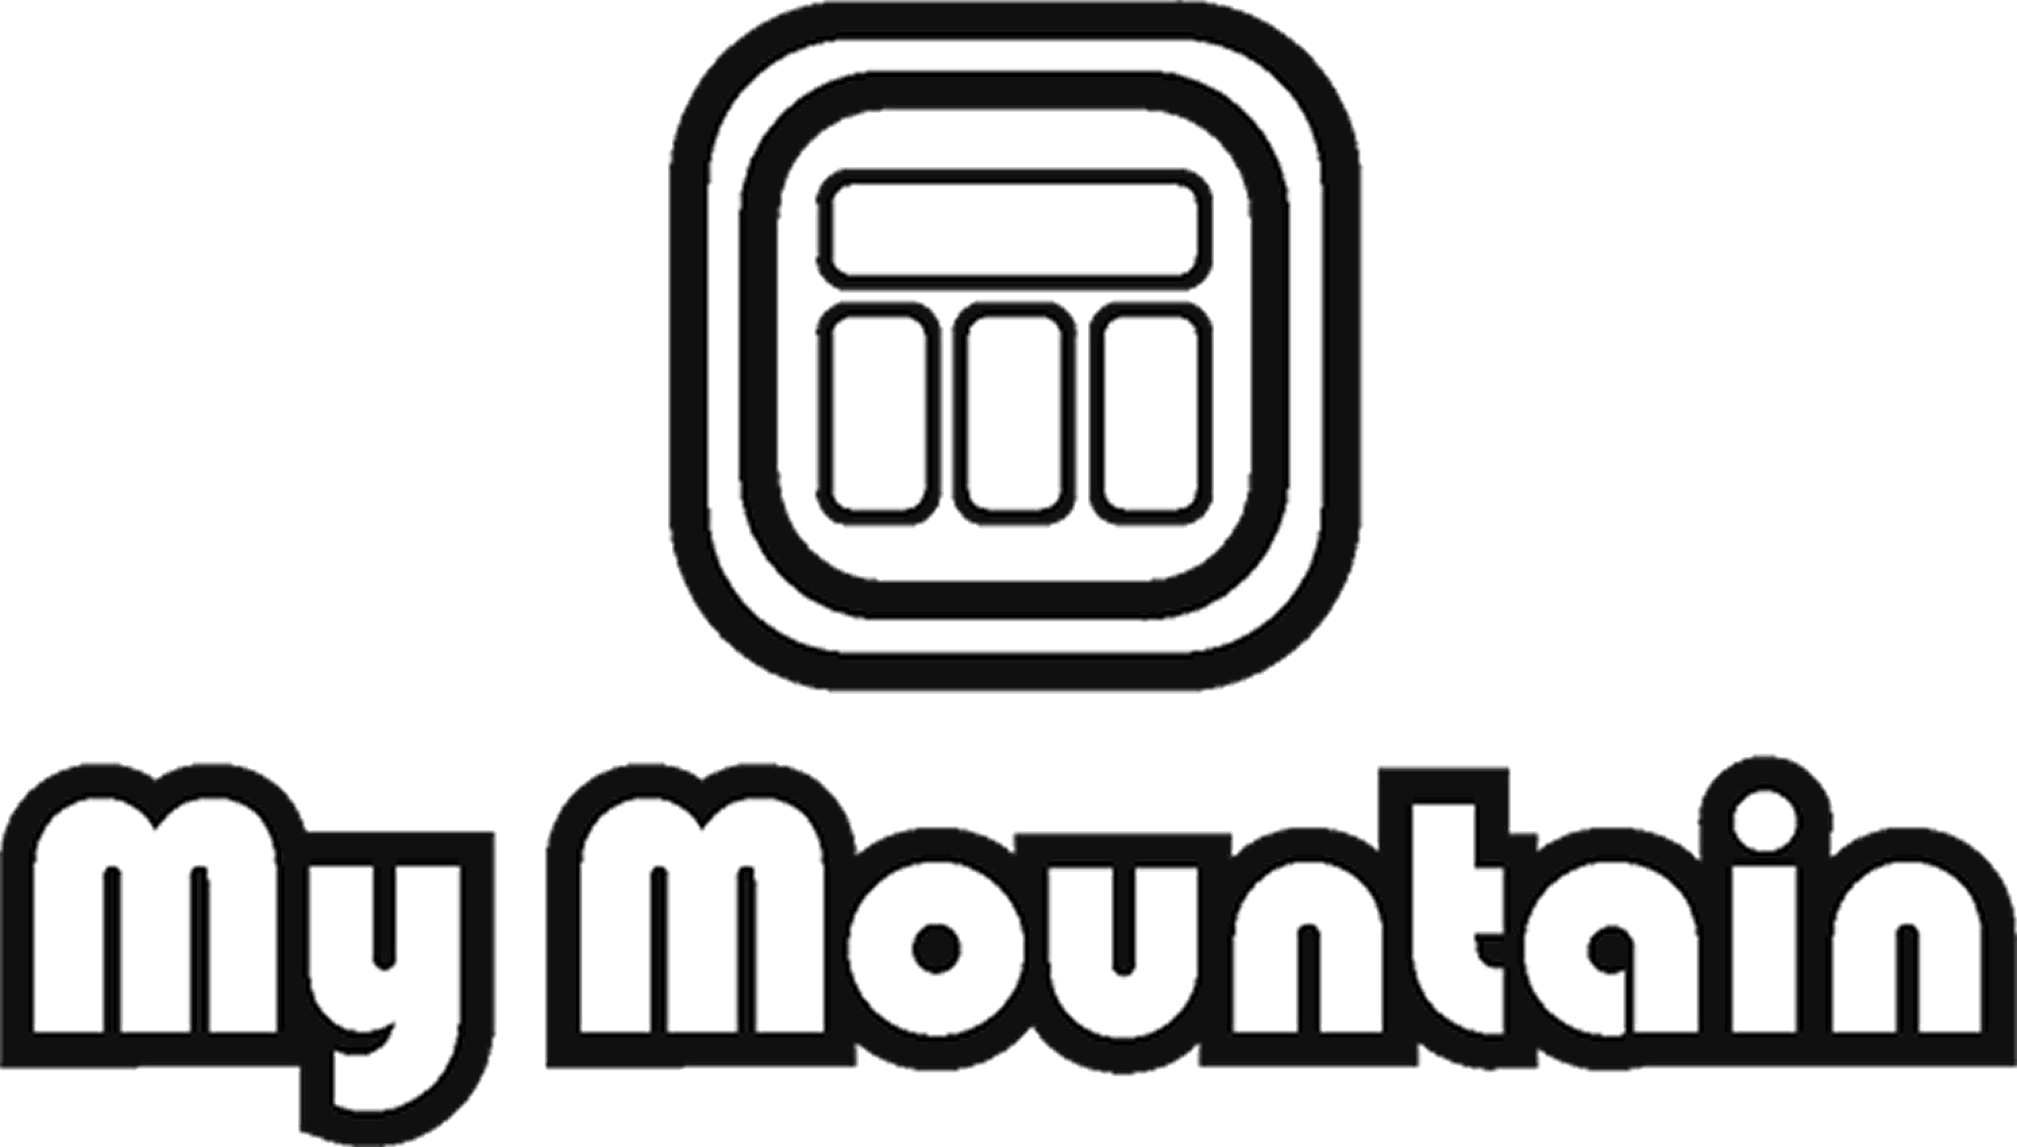 My Mountain